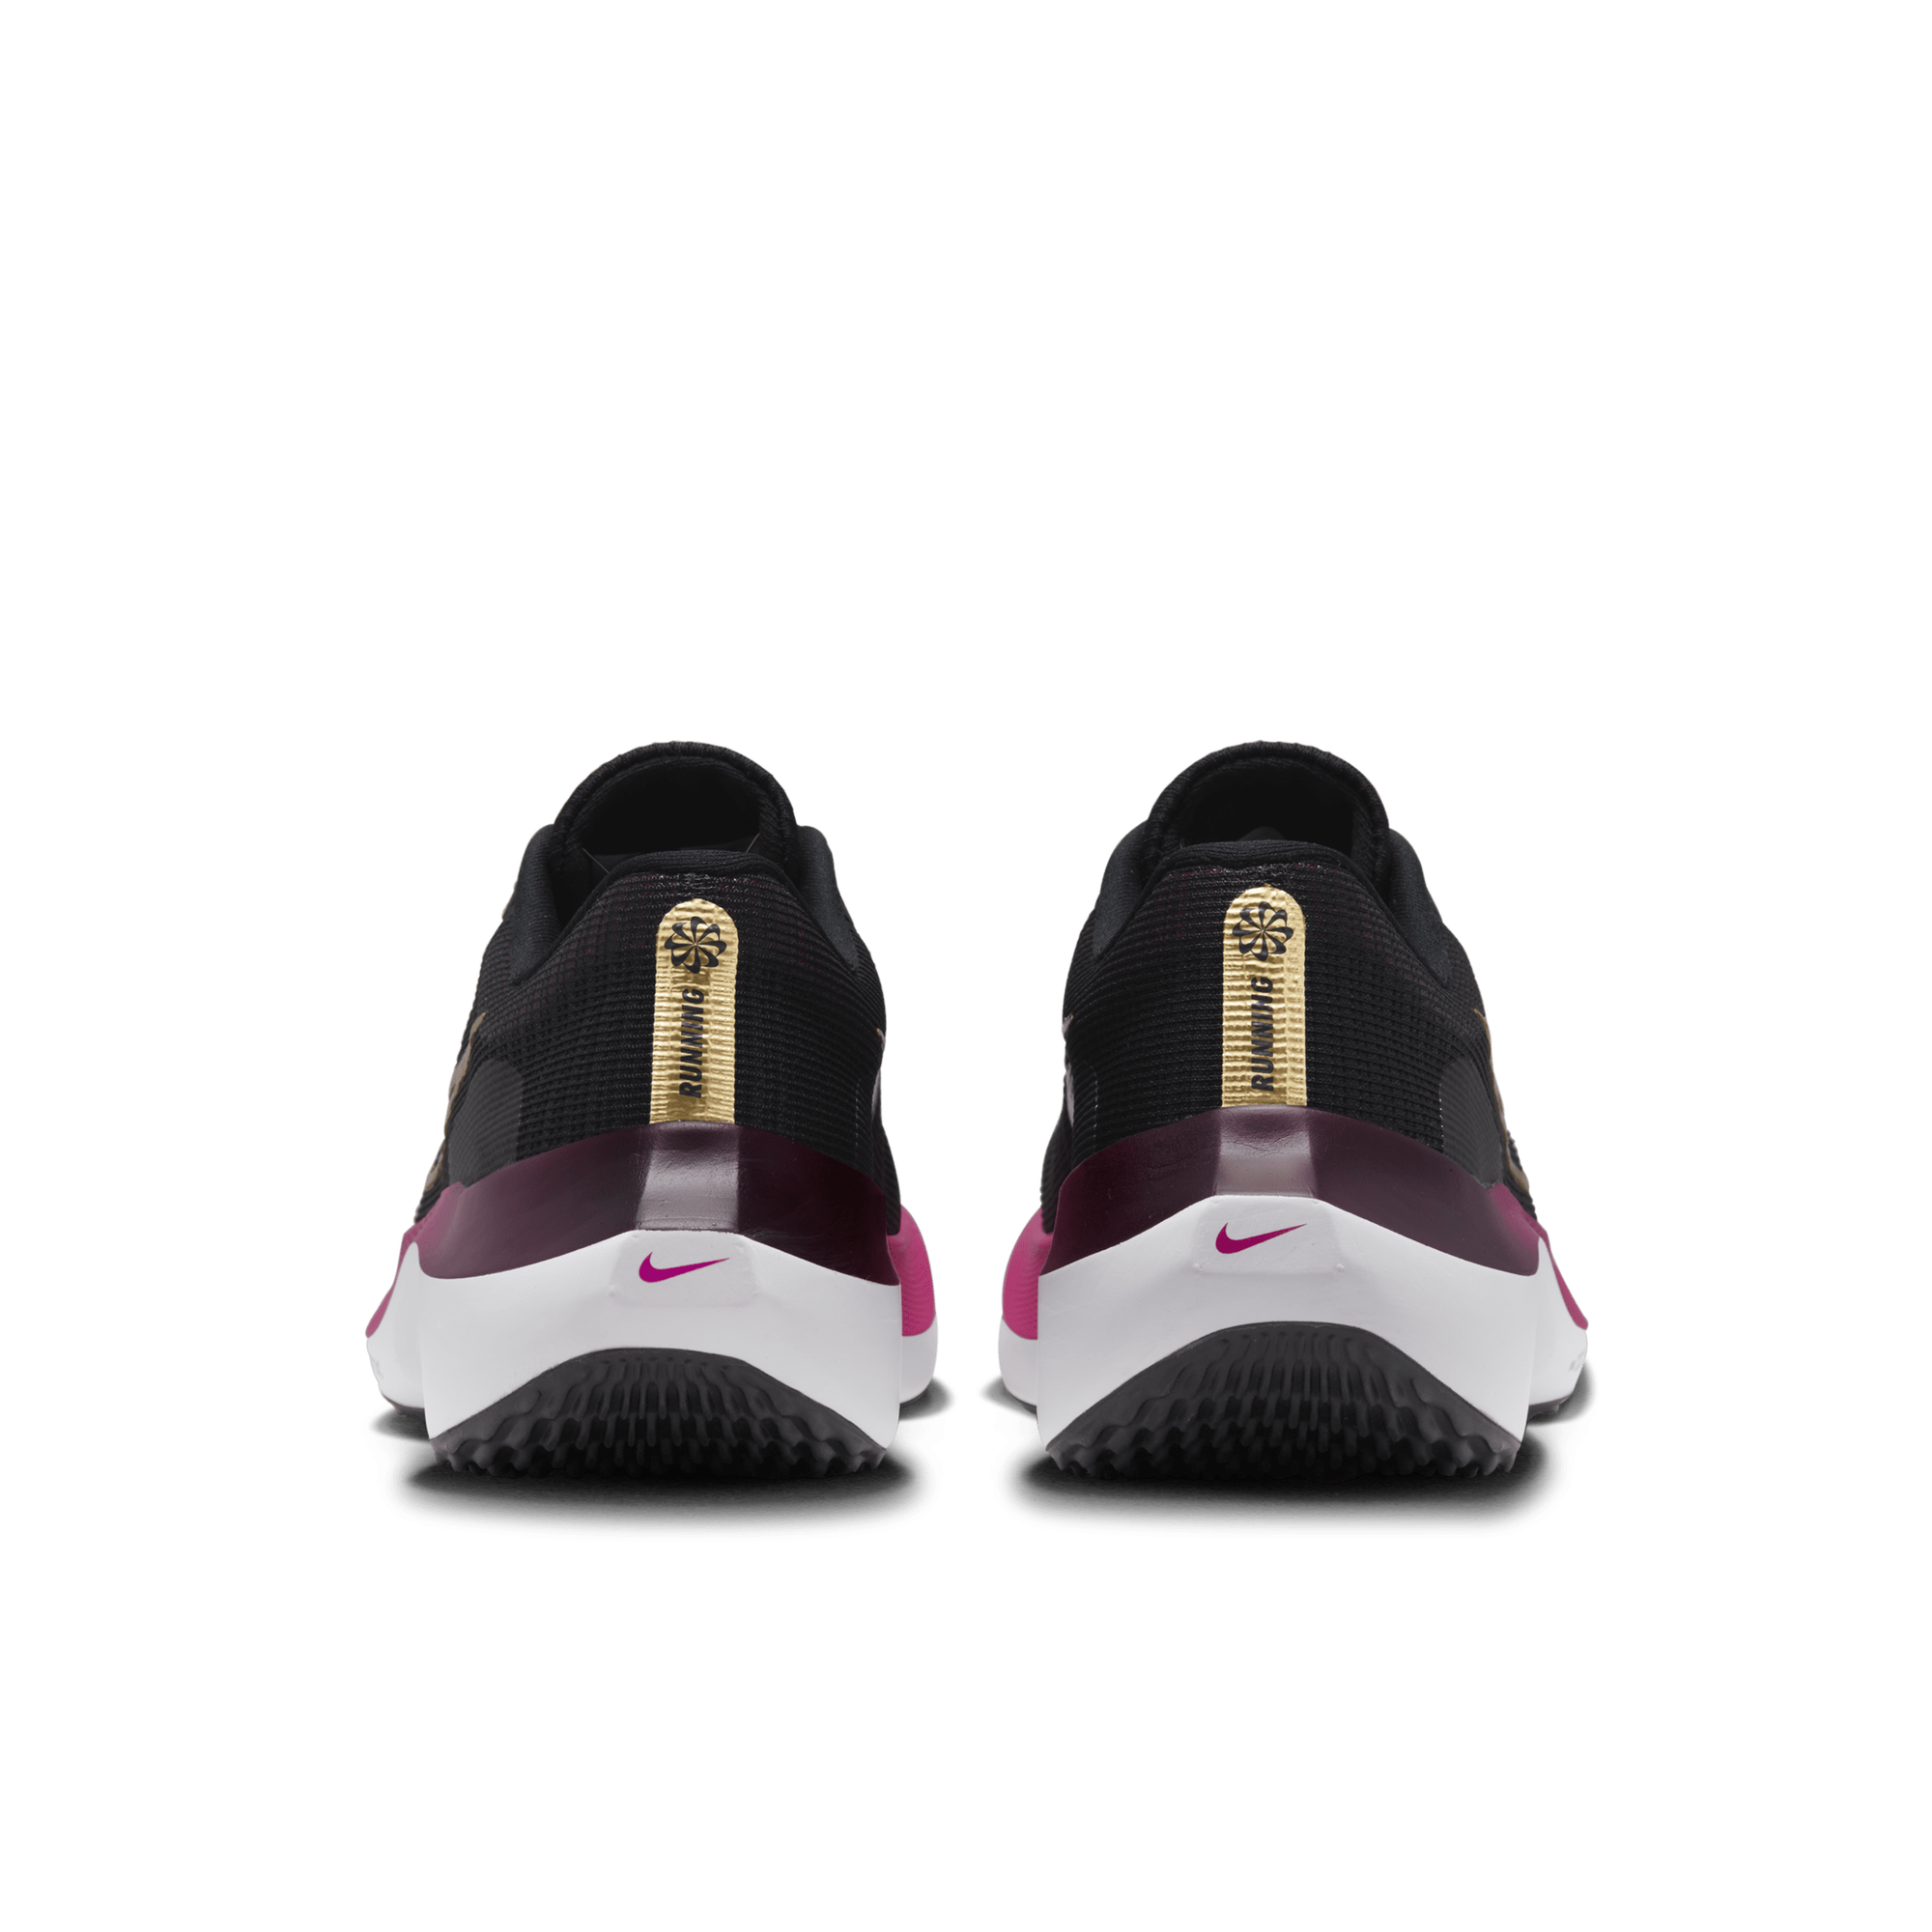 Shop Zoom Fly 5 Women's Road Running Shoes | Nike UAE